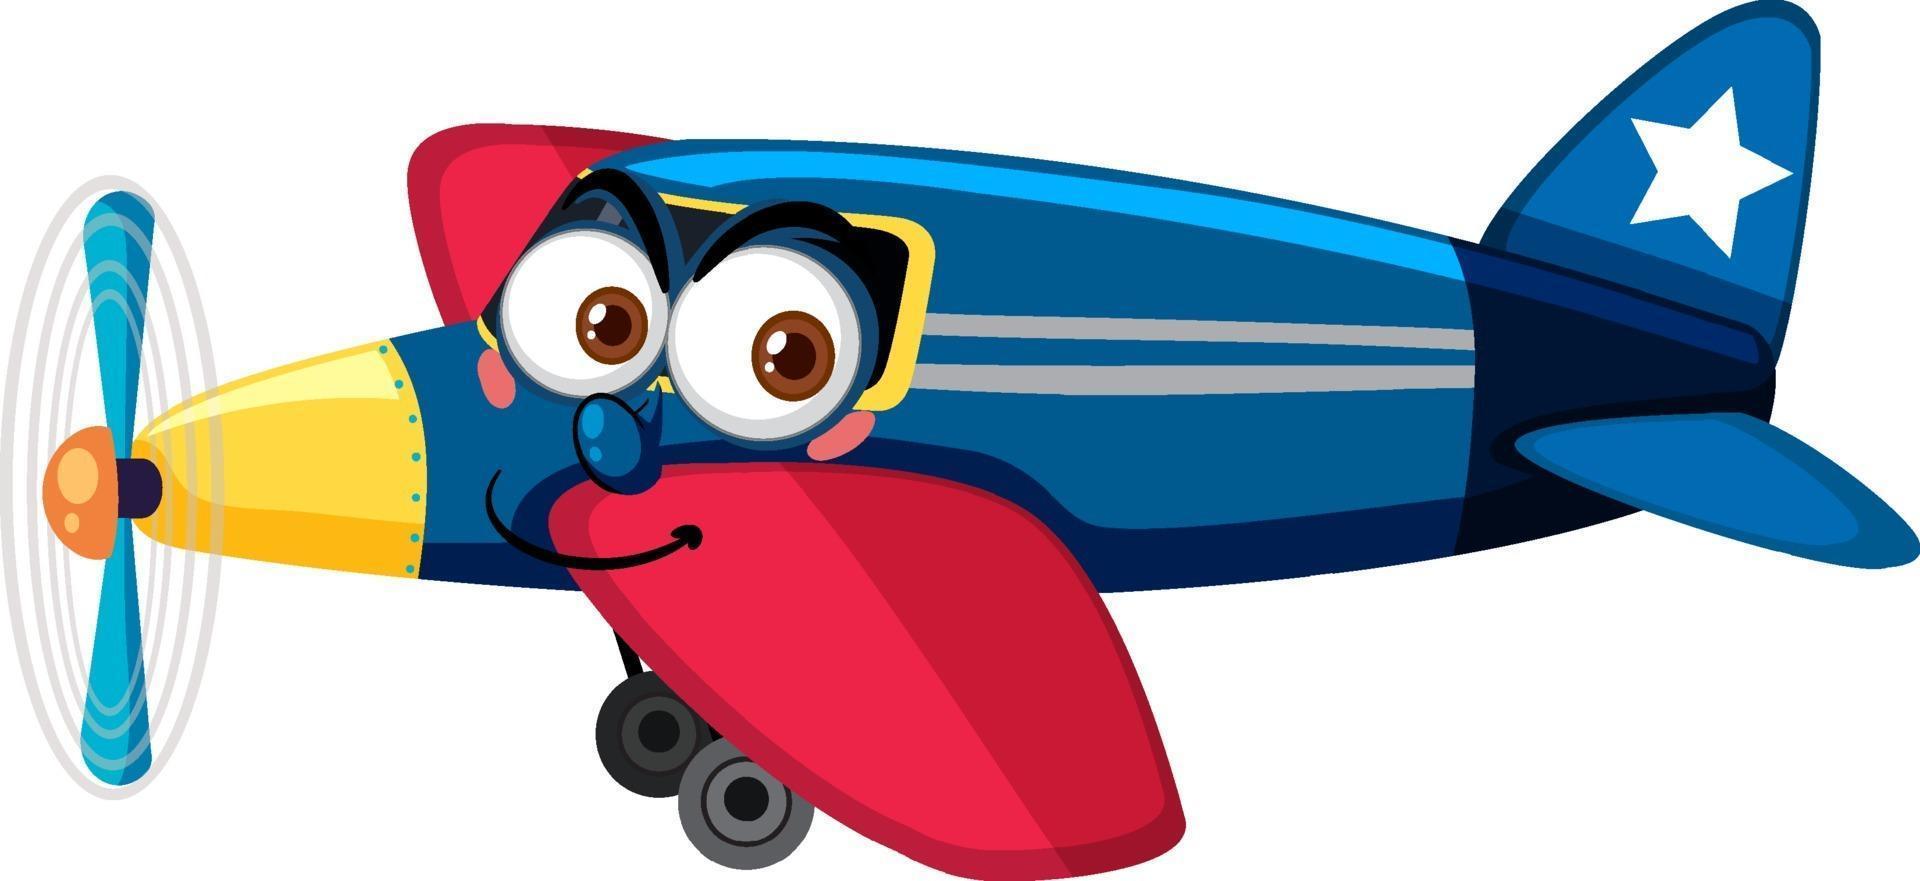 Avión con personaje de dibujos animados de expresión facial sobre fondo blanco. vector